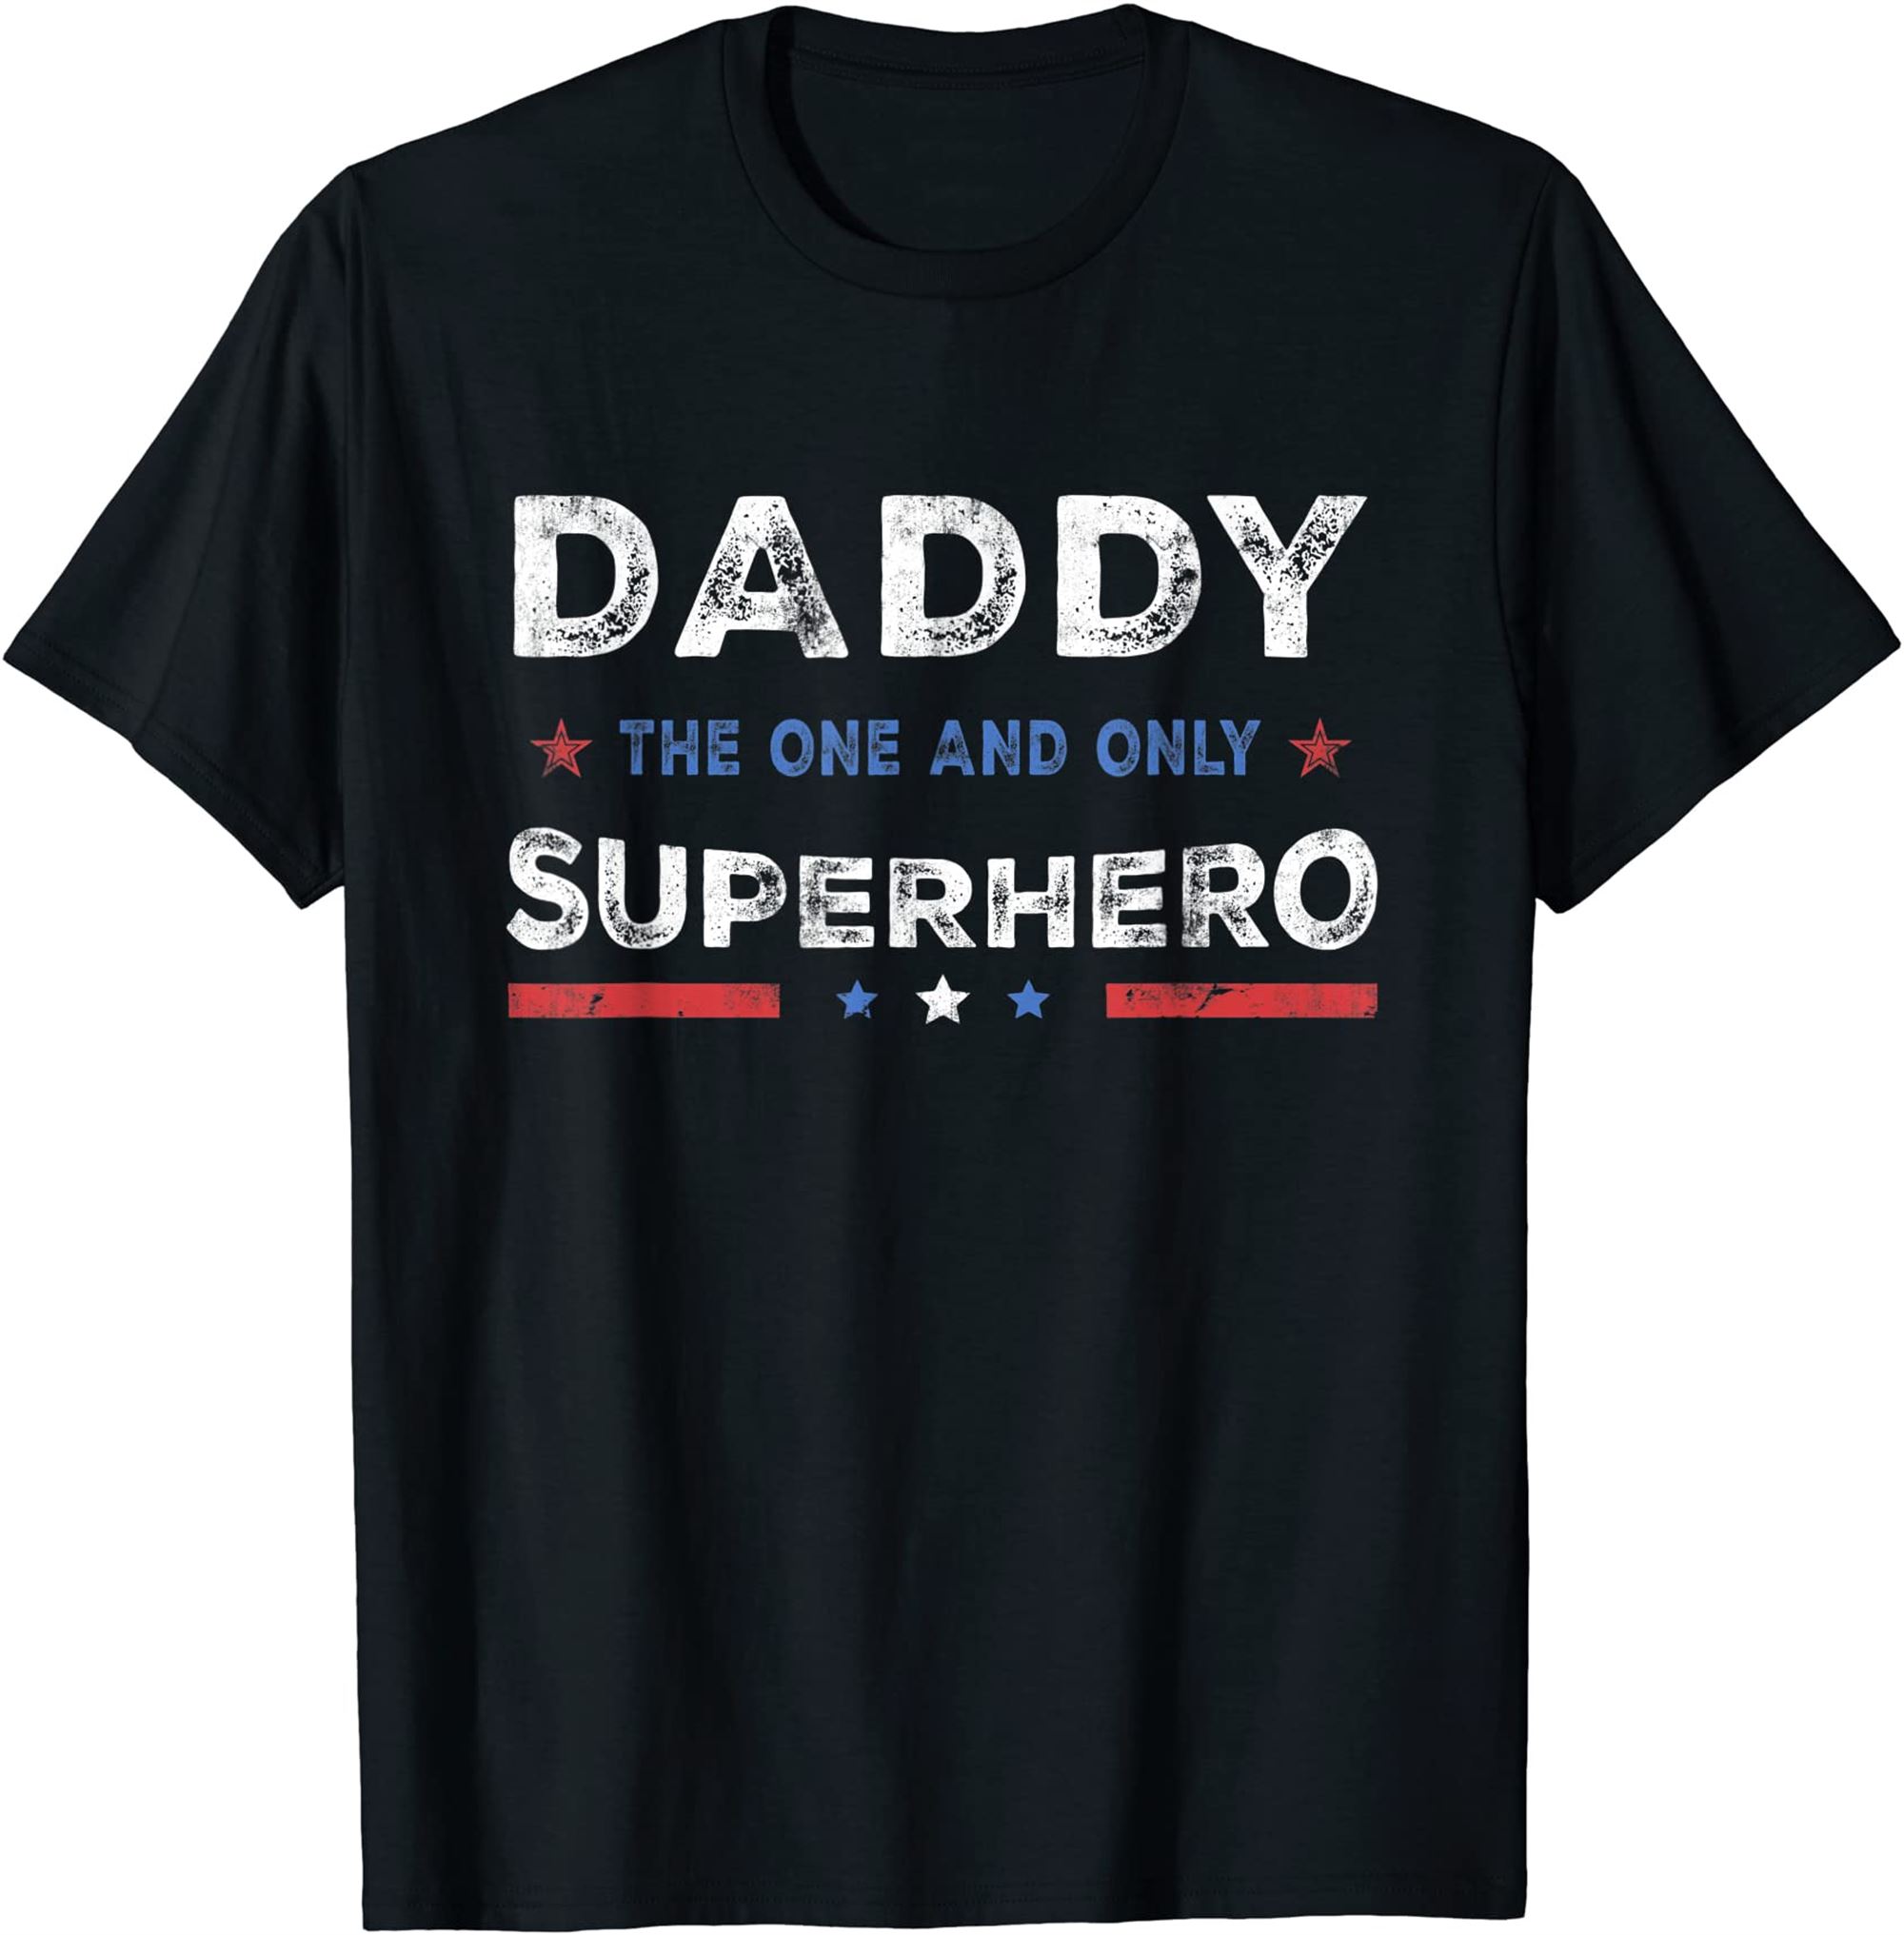 Mens Daddy Superdad Superhero Superdad Father Hero Star T-shirt Plus Size Up To 5xl